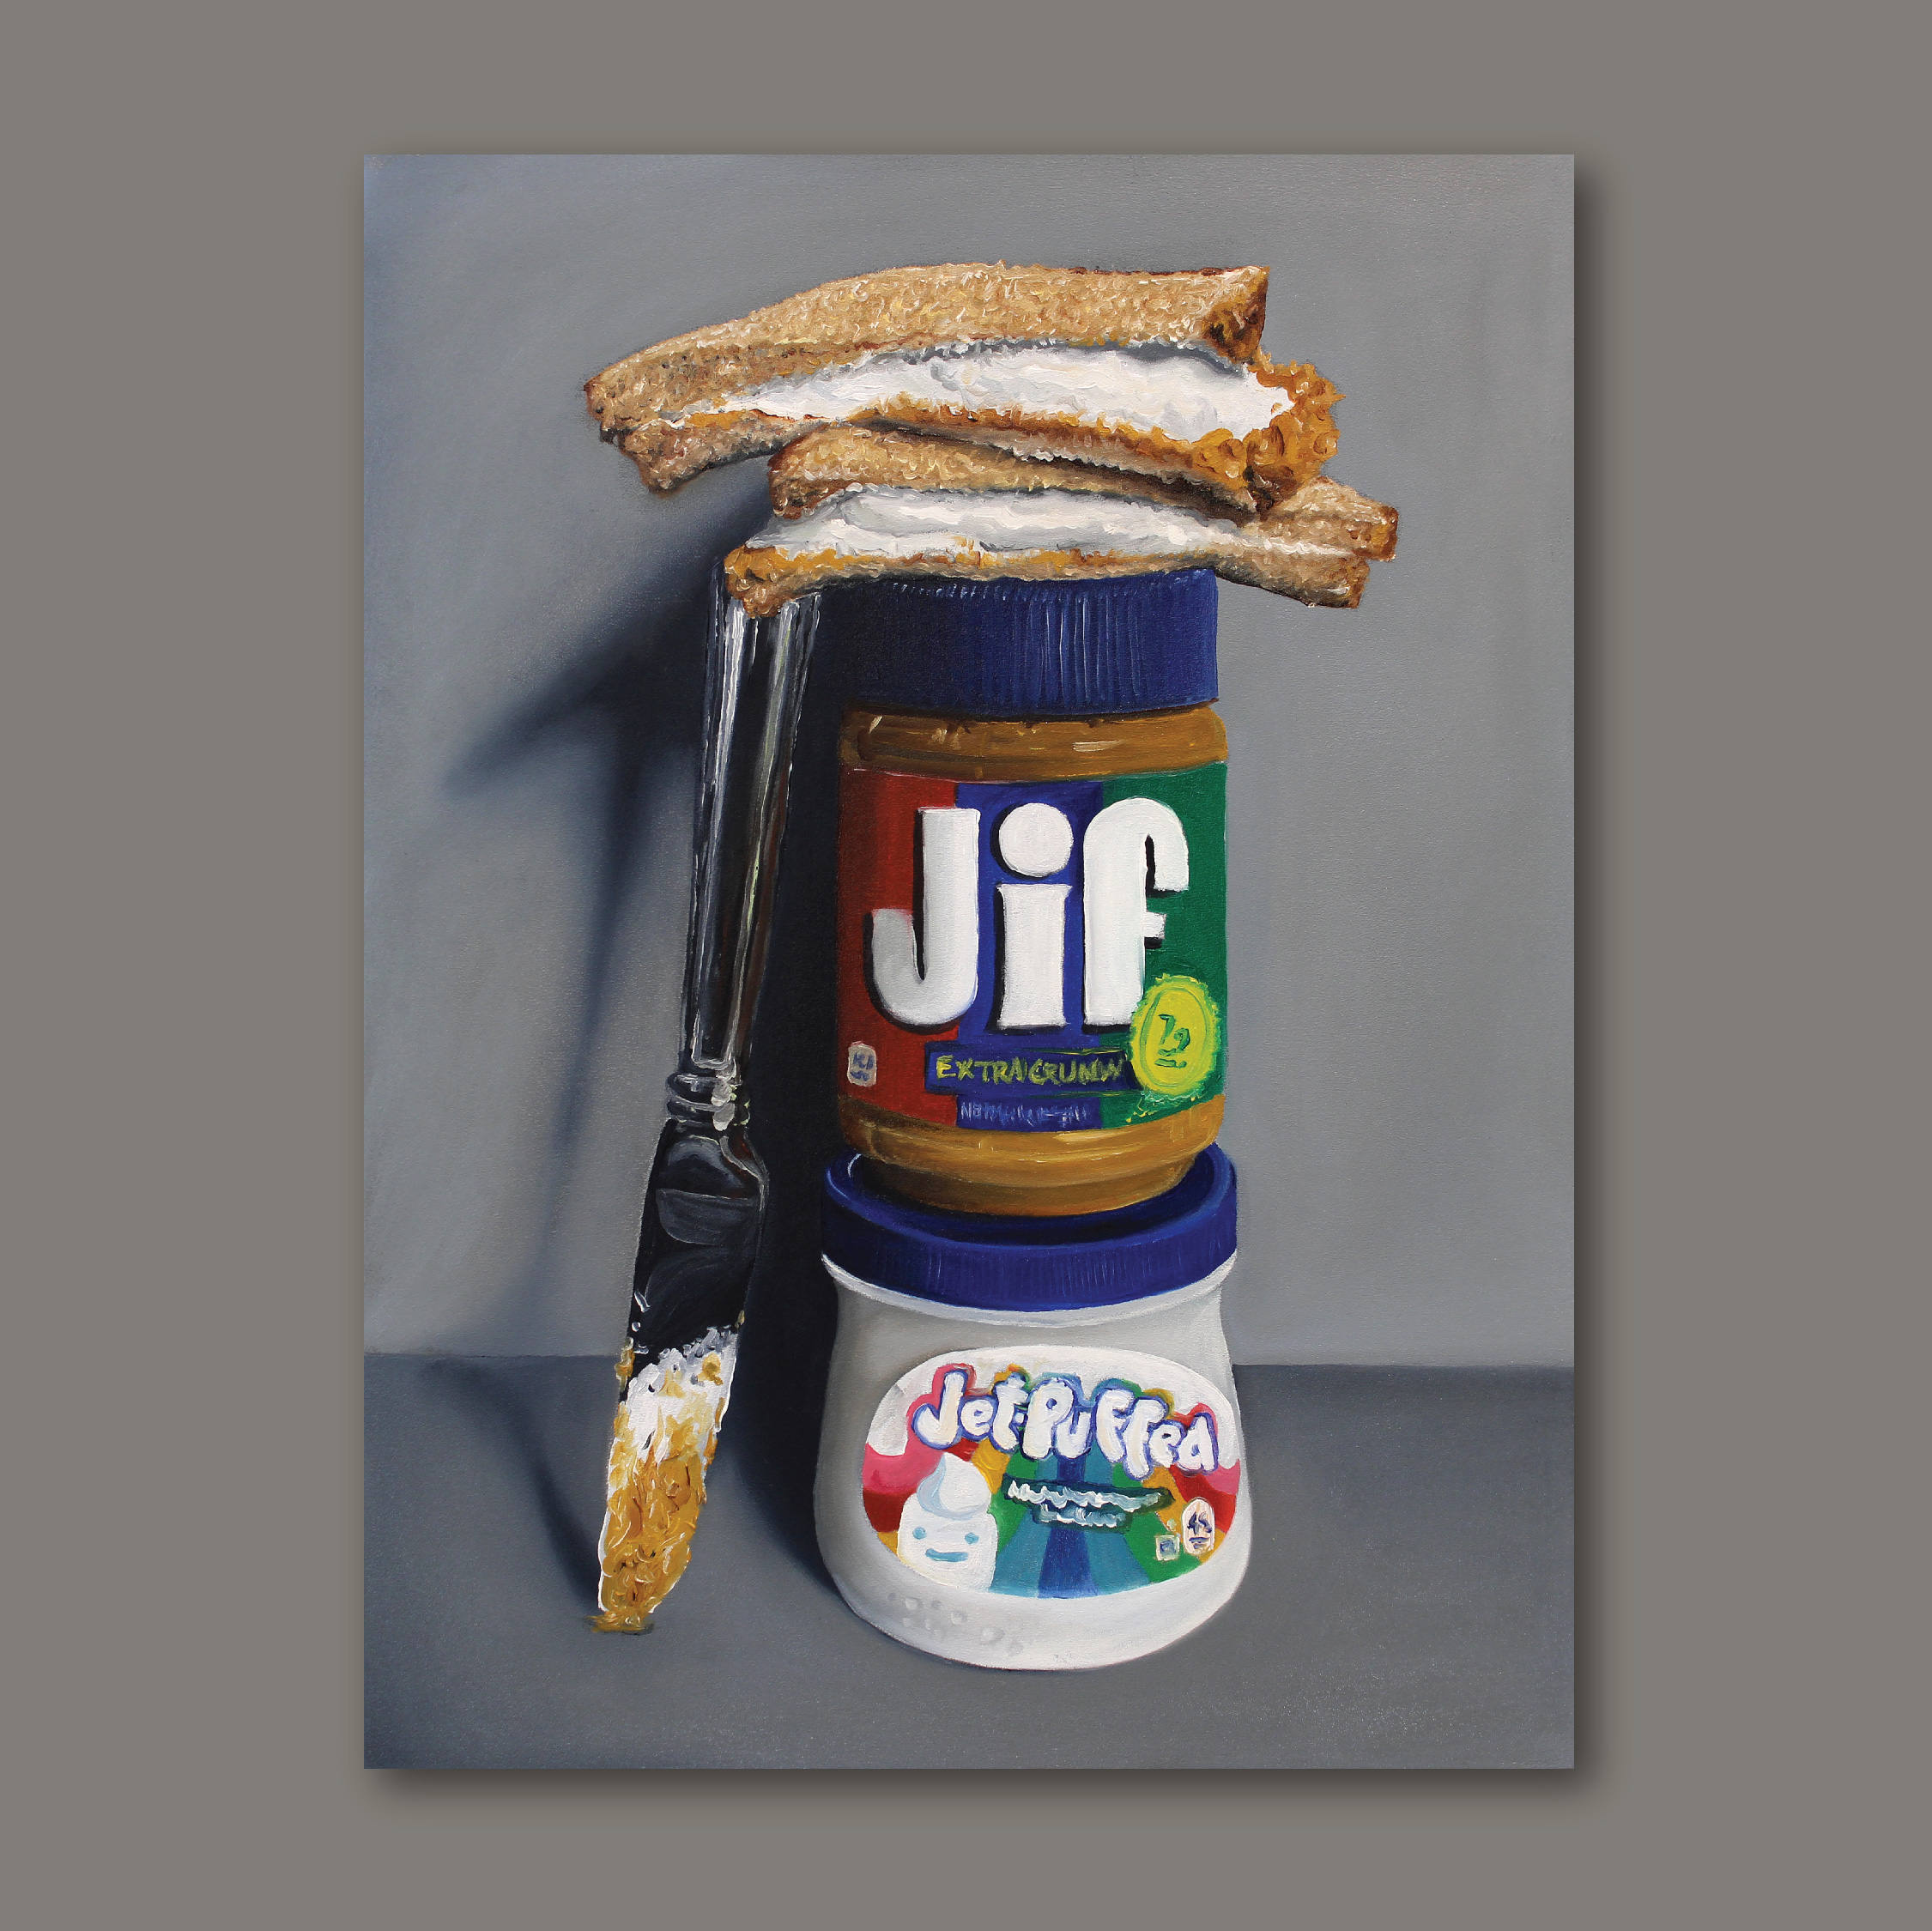 "Marshmallow Creme and PB Sandwich" 12x16 Print